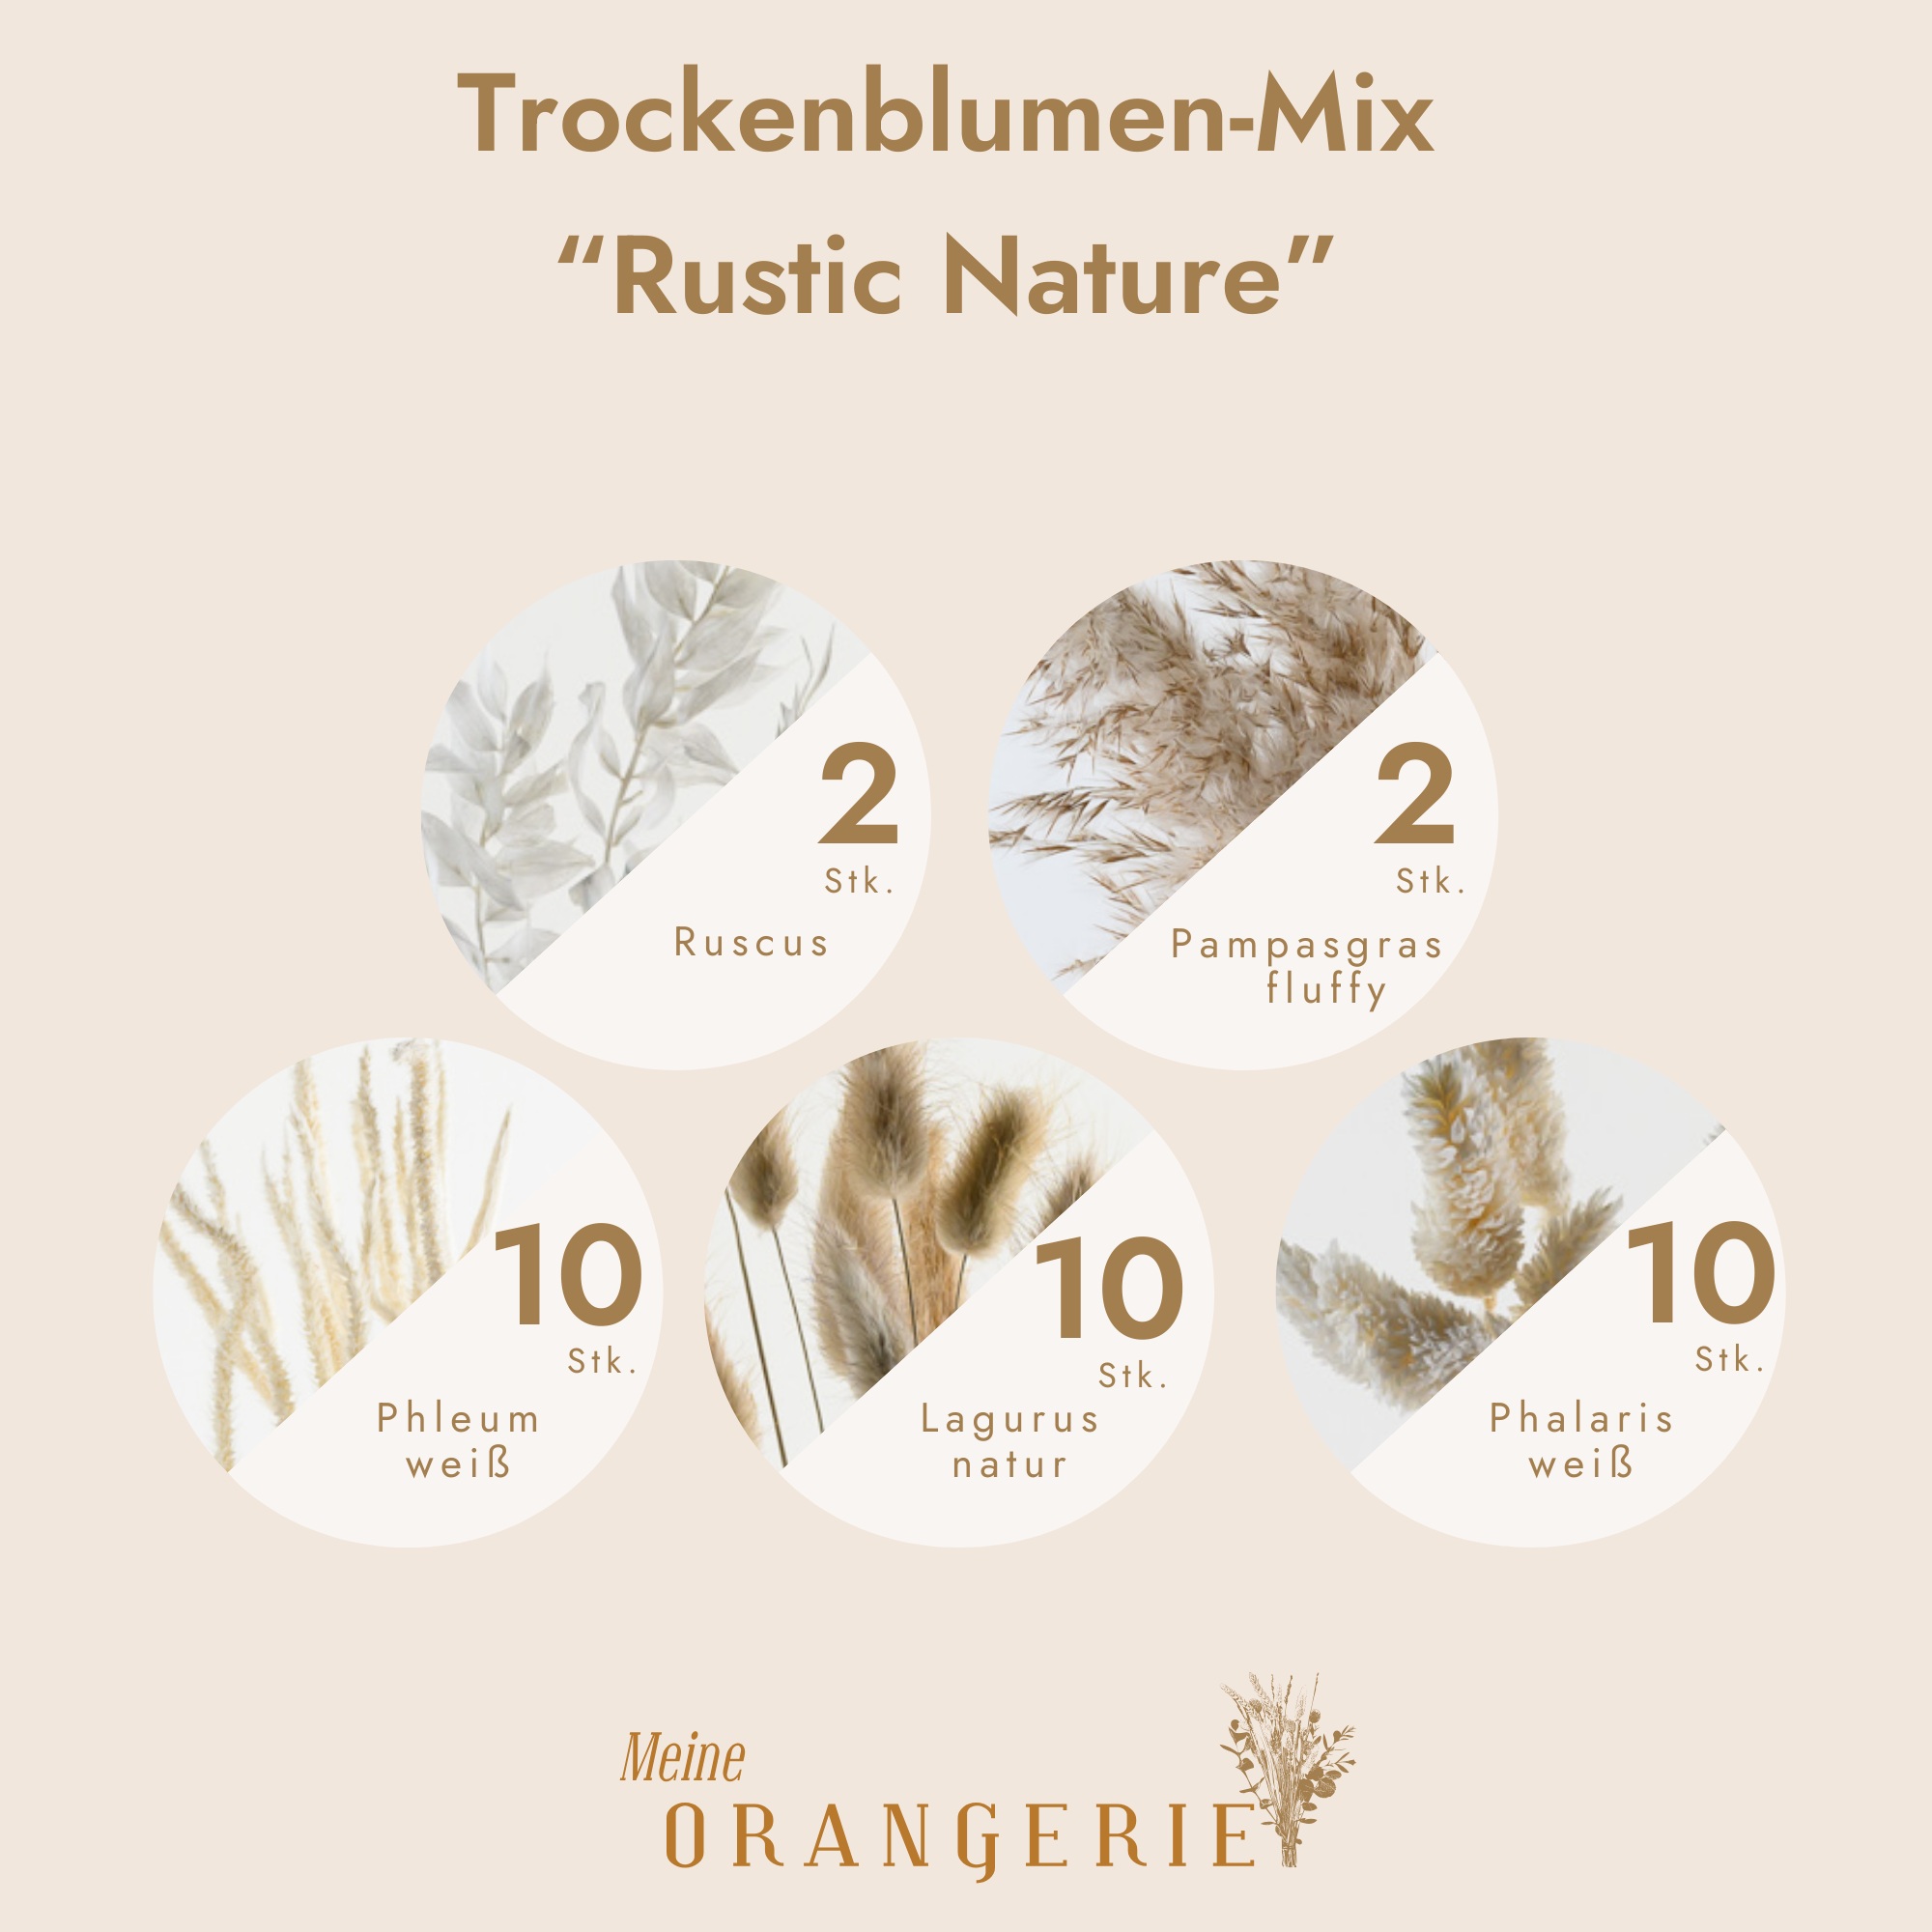 Trockenblumen-Mix "Rustic Nature"